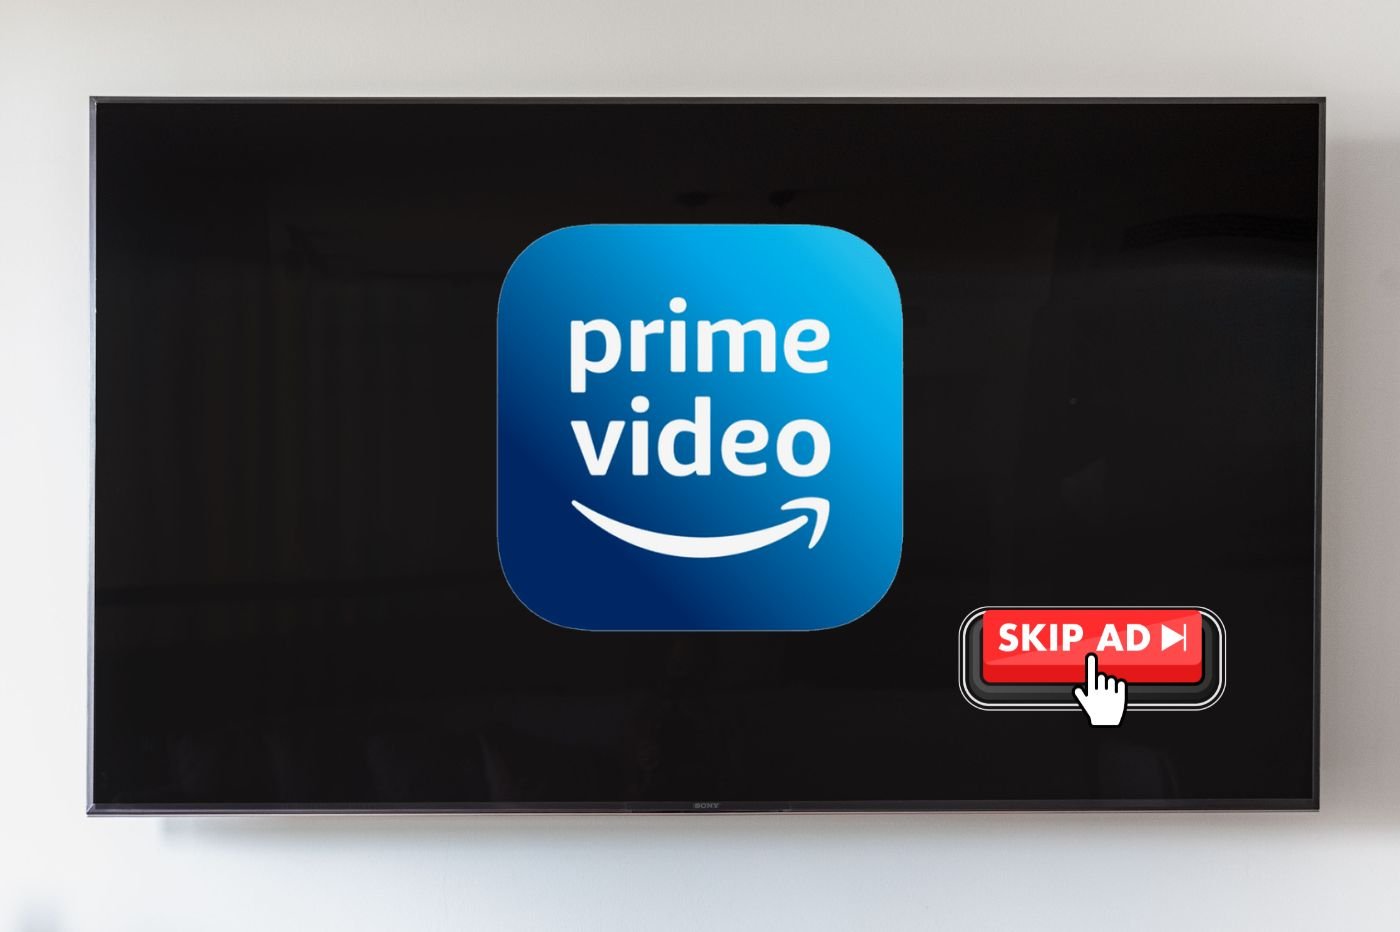 Prime Video Skip Ad